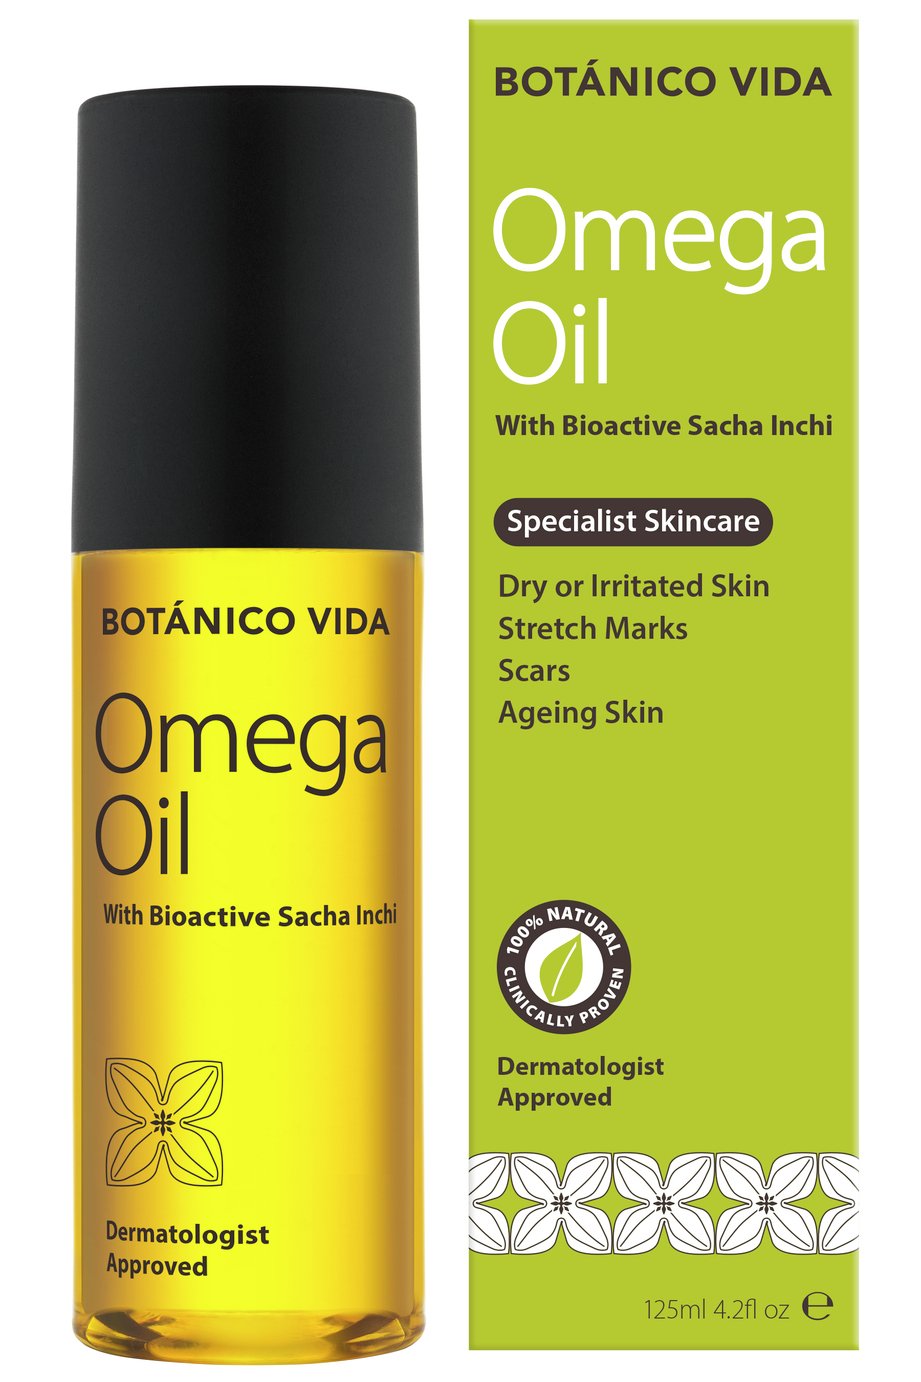 Botanico Vida Omega Oil - 125ml